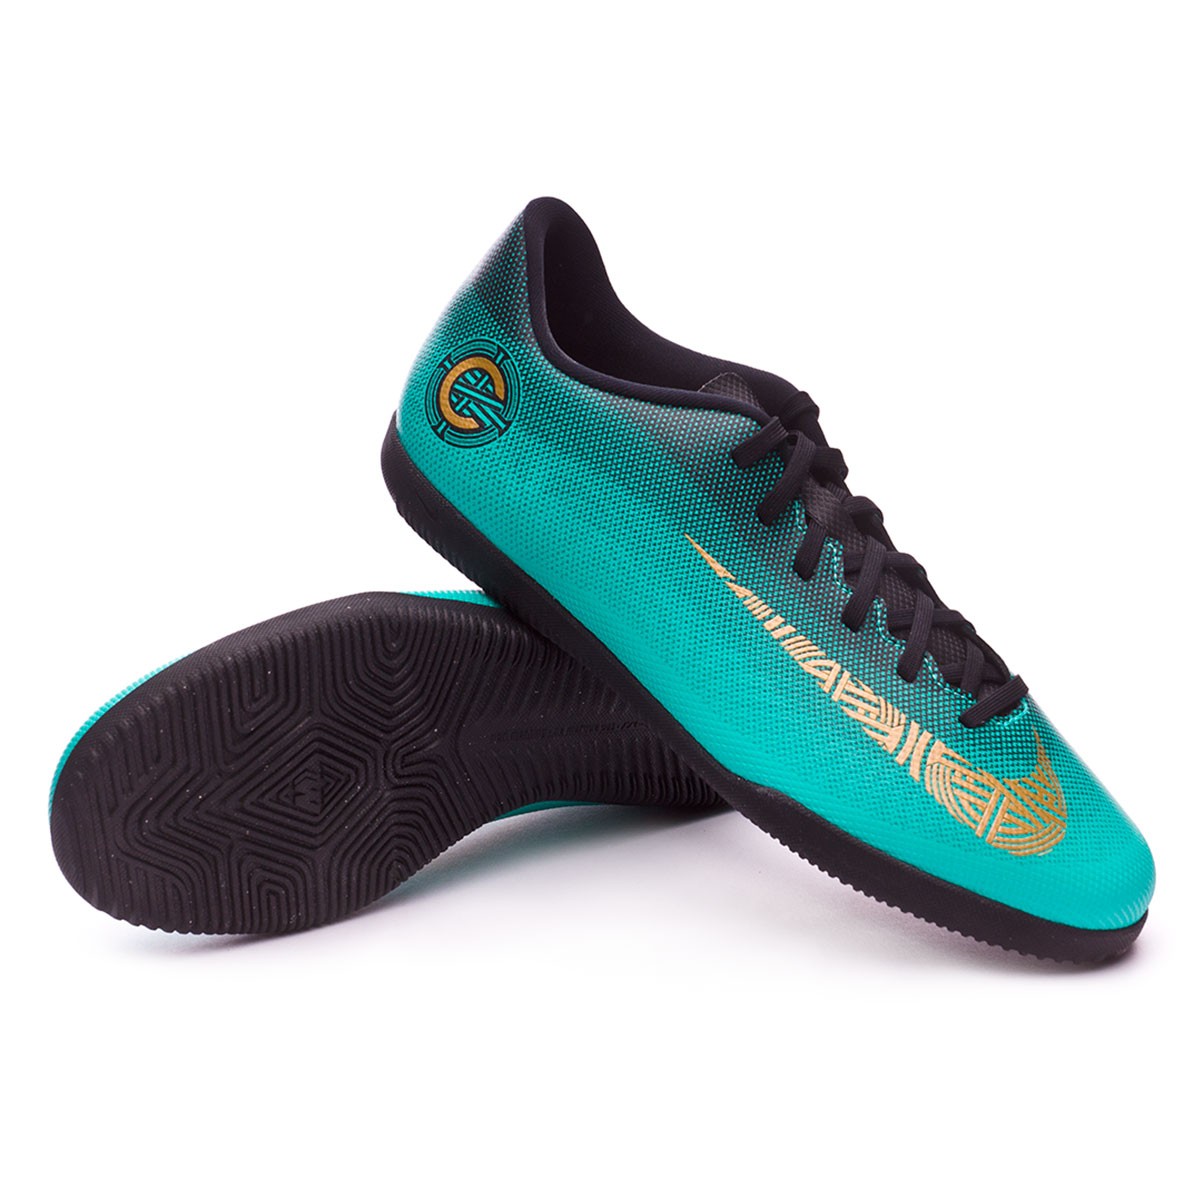 Nike Mercurial Vapor Superfly II Released Soccer Cleats 101